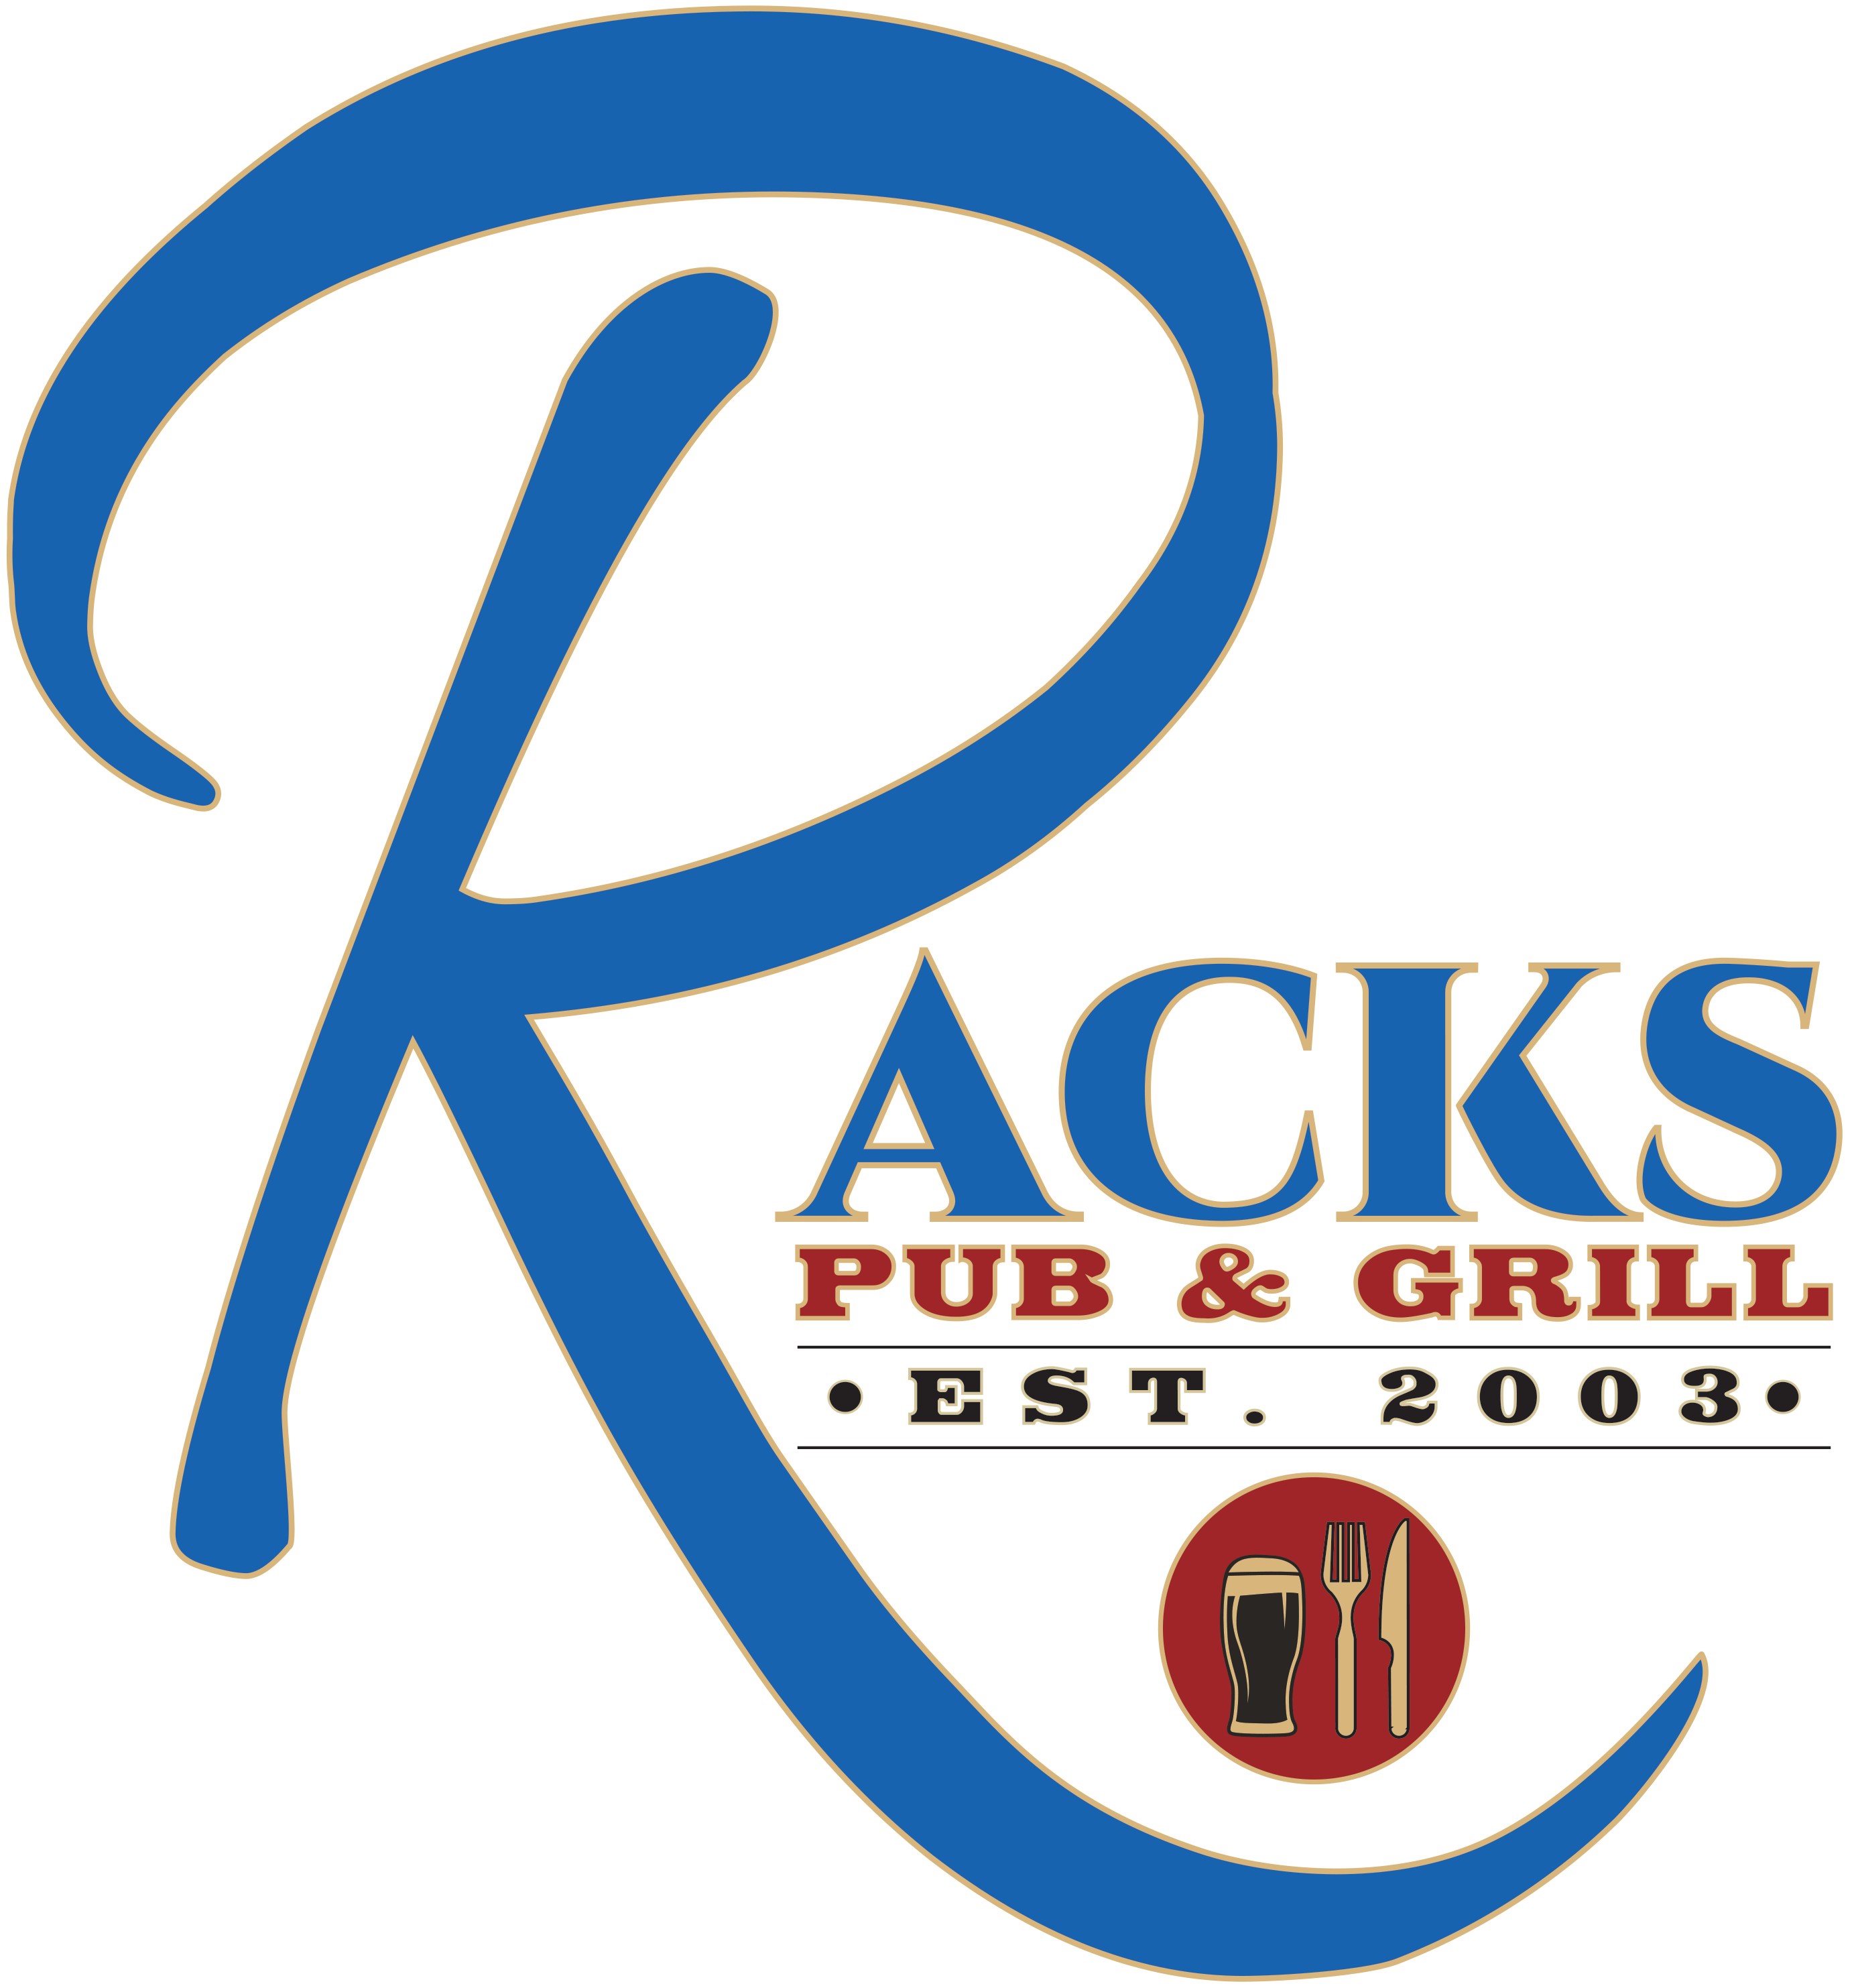 Rack's Pub & Grill Logo link to website